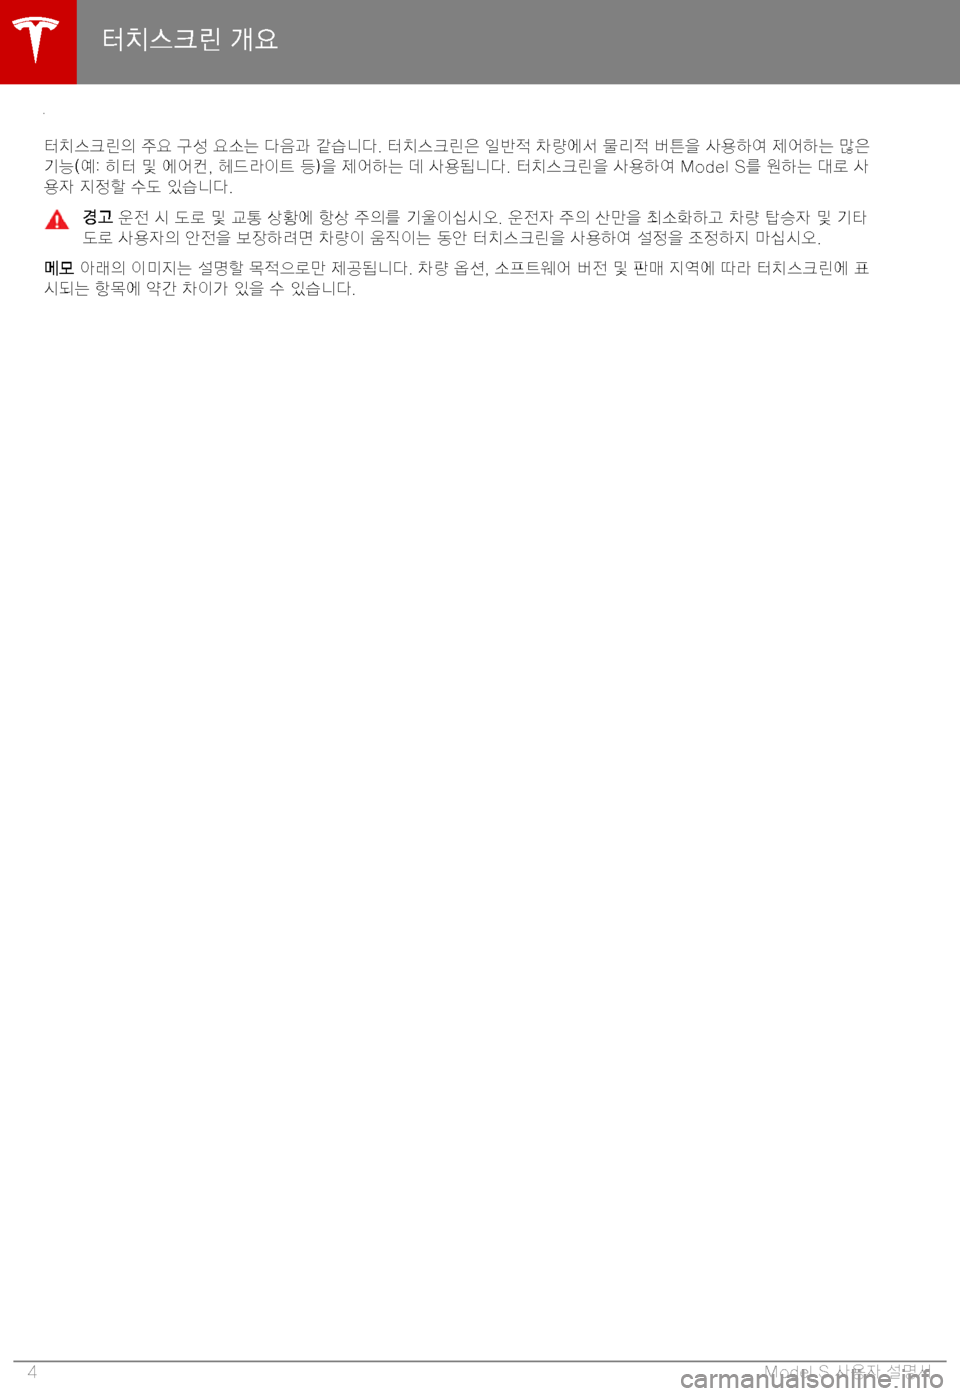 TESLA MODEL S 2019  사용자 가이드 (in Korean) GMDu8